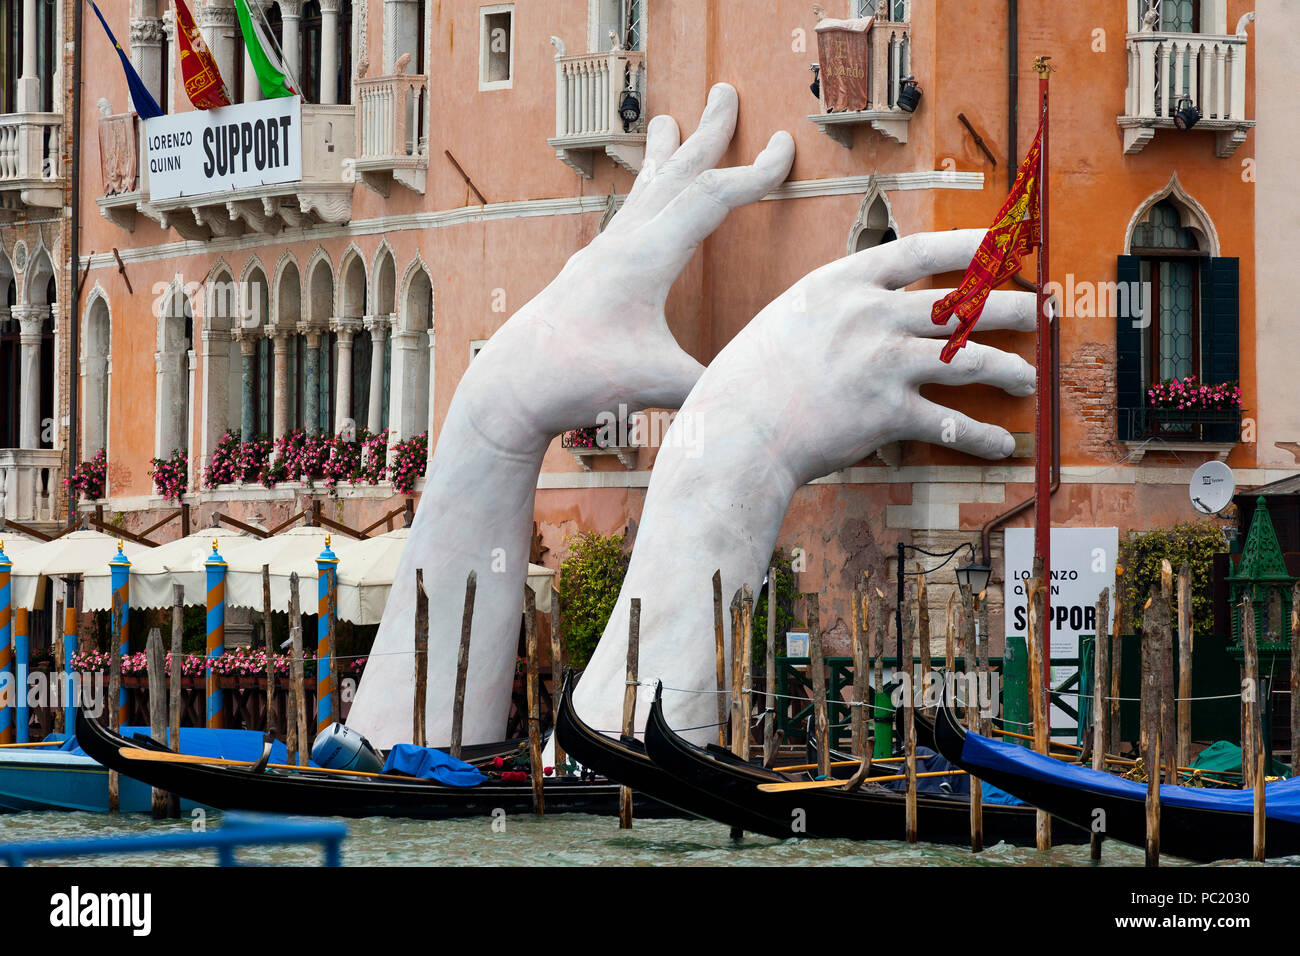 Mani gigante scultura in Venezia Foto stock - Alamy